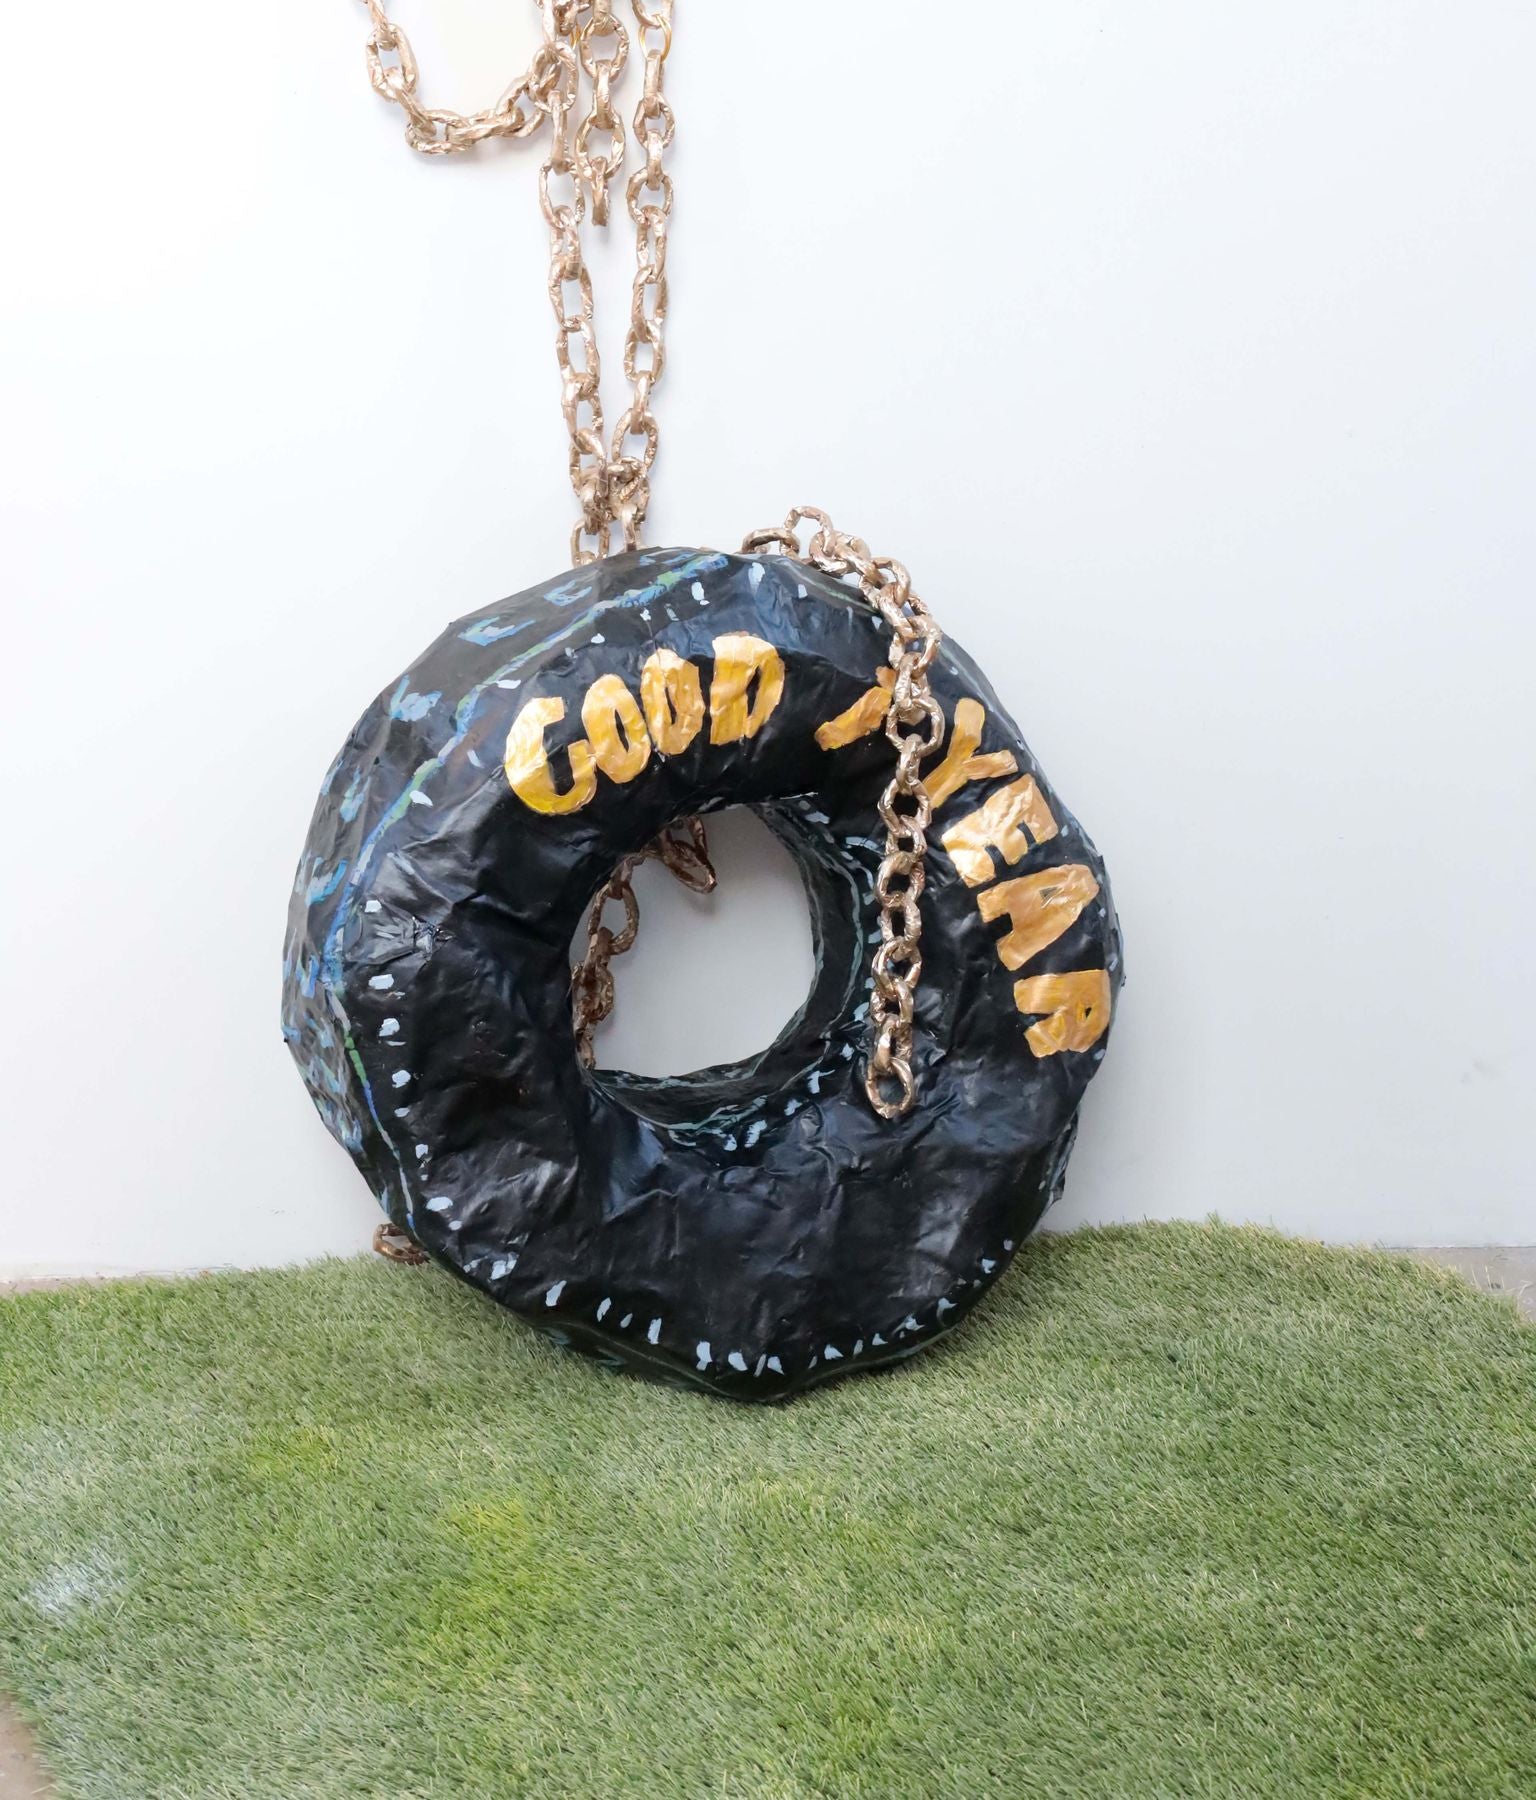 Taylor Lee Nicholson, "Goodyear Tire" SOLD